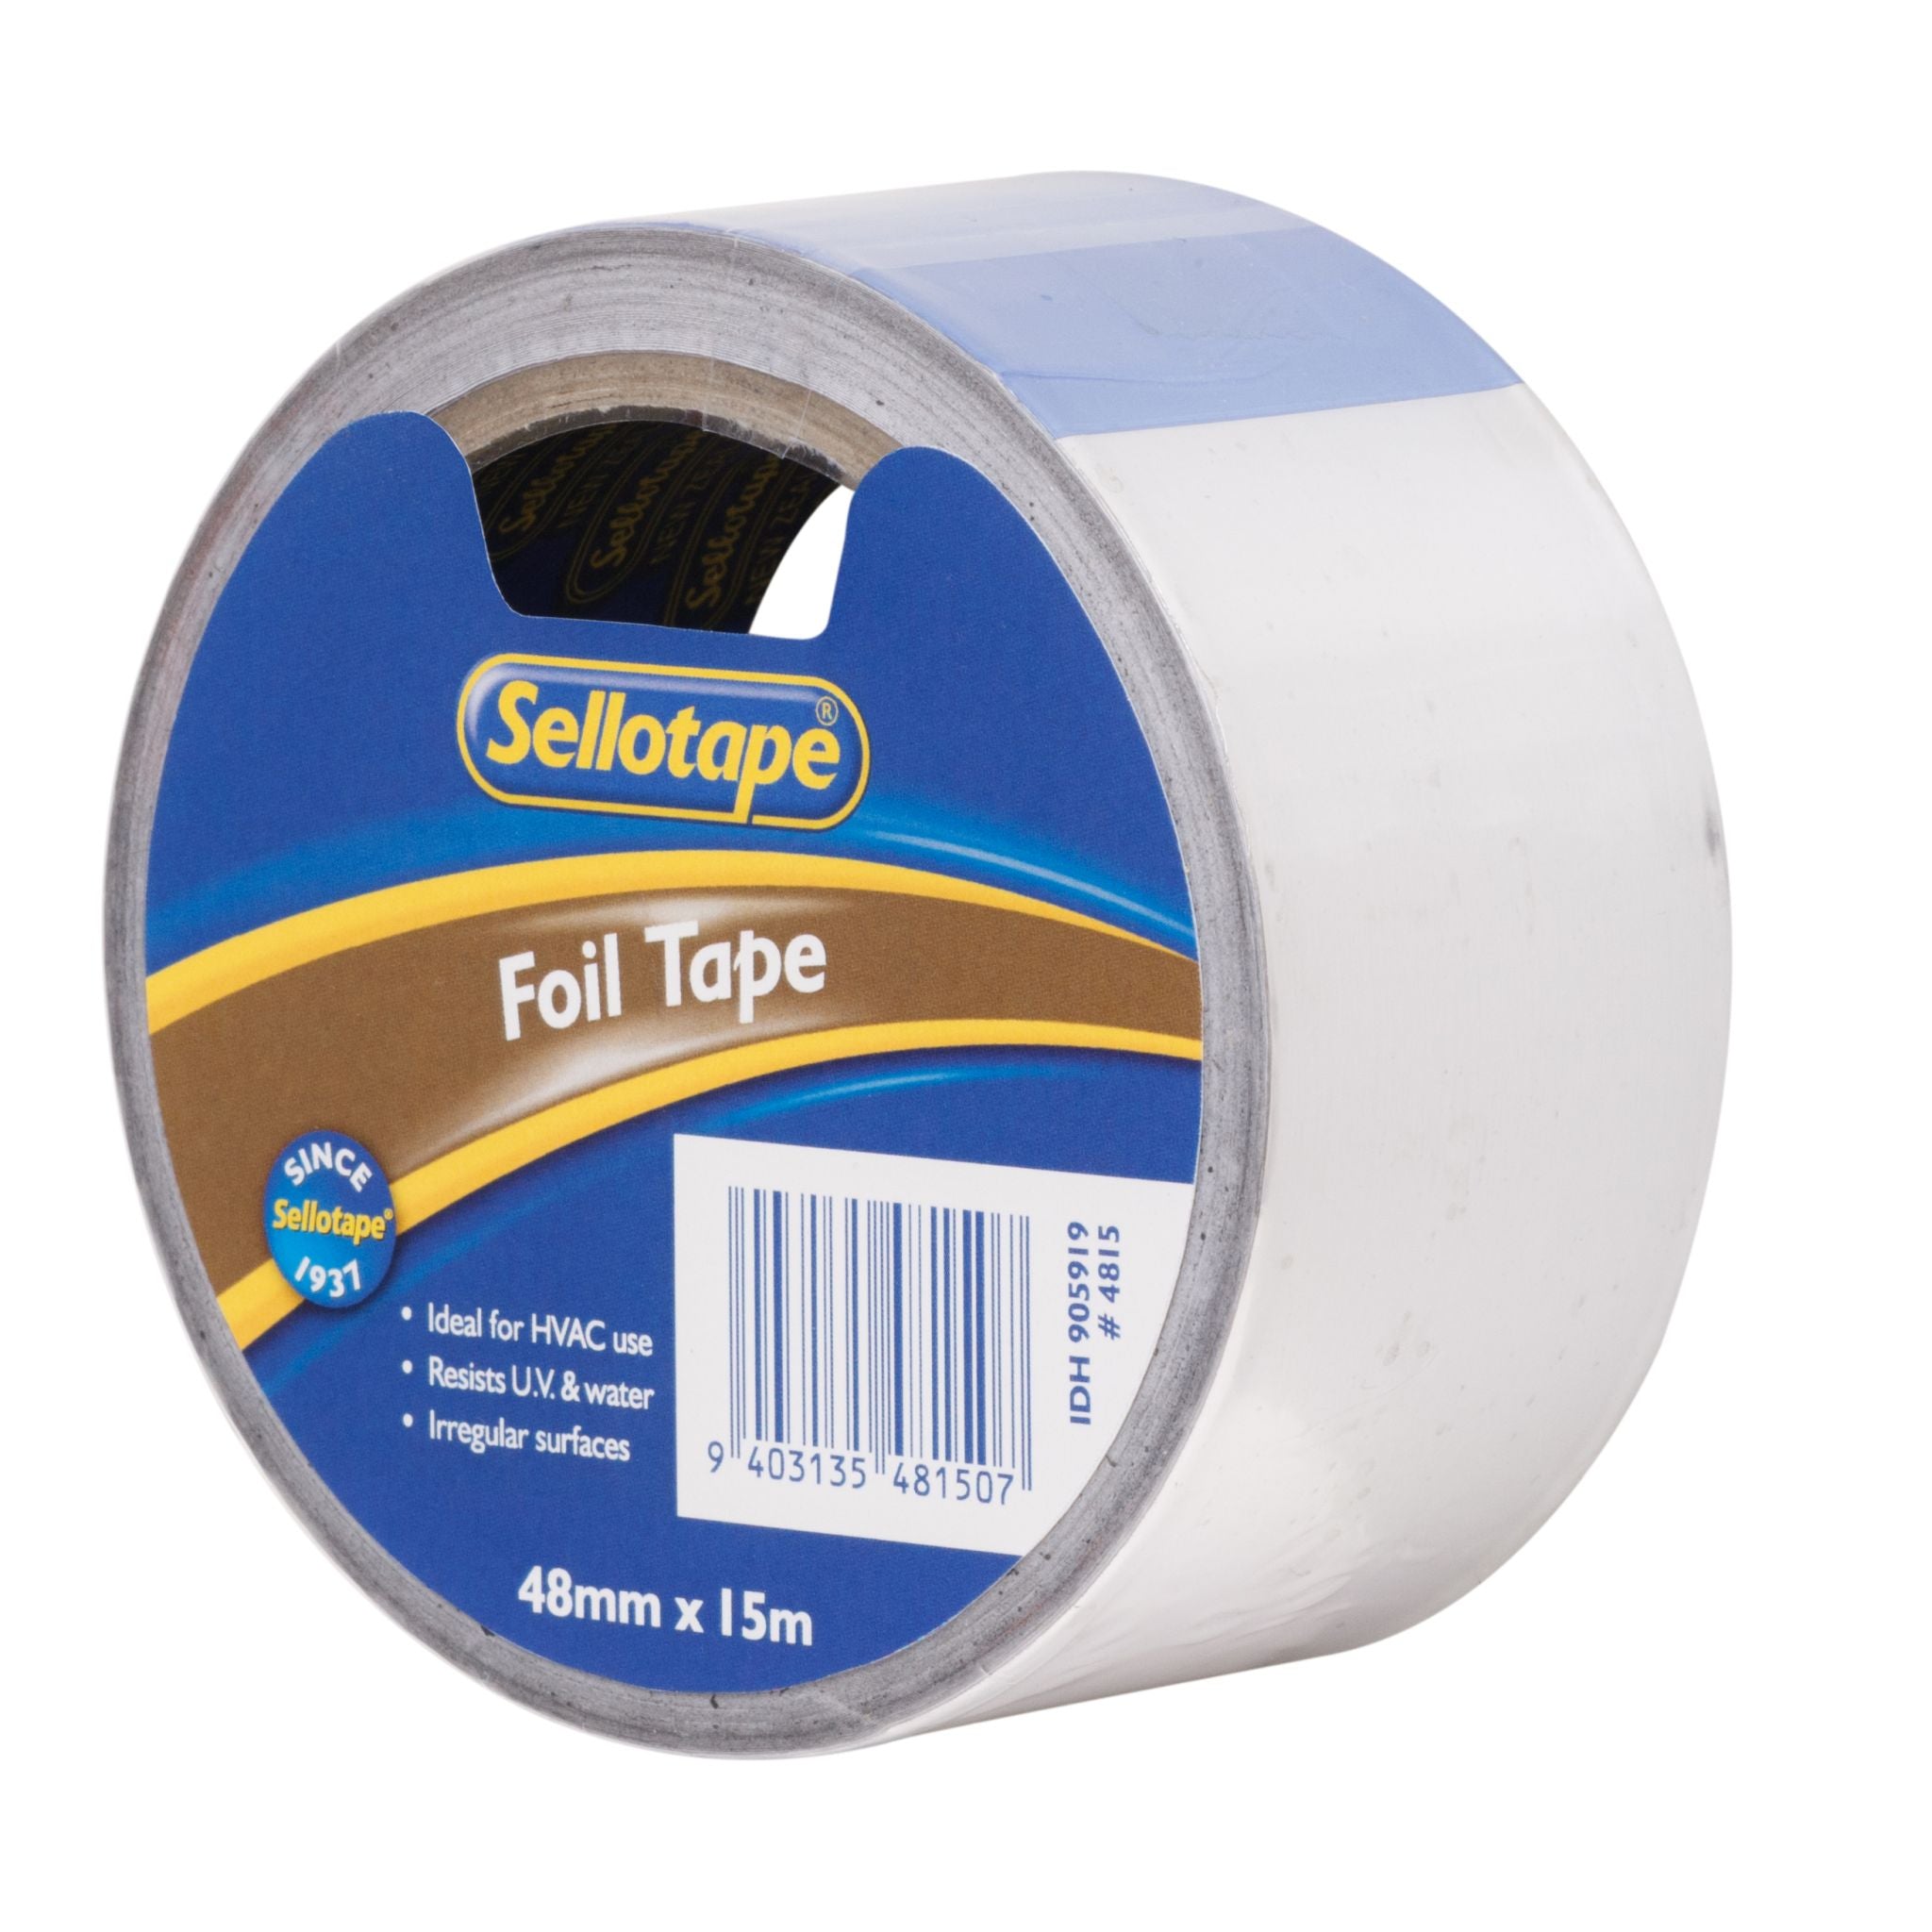 Sellotape 4815 Foil Tape 48mmx15m